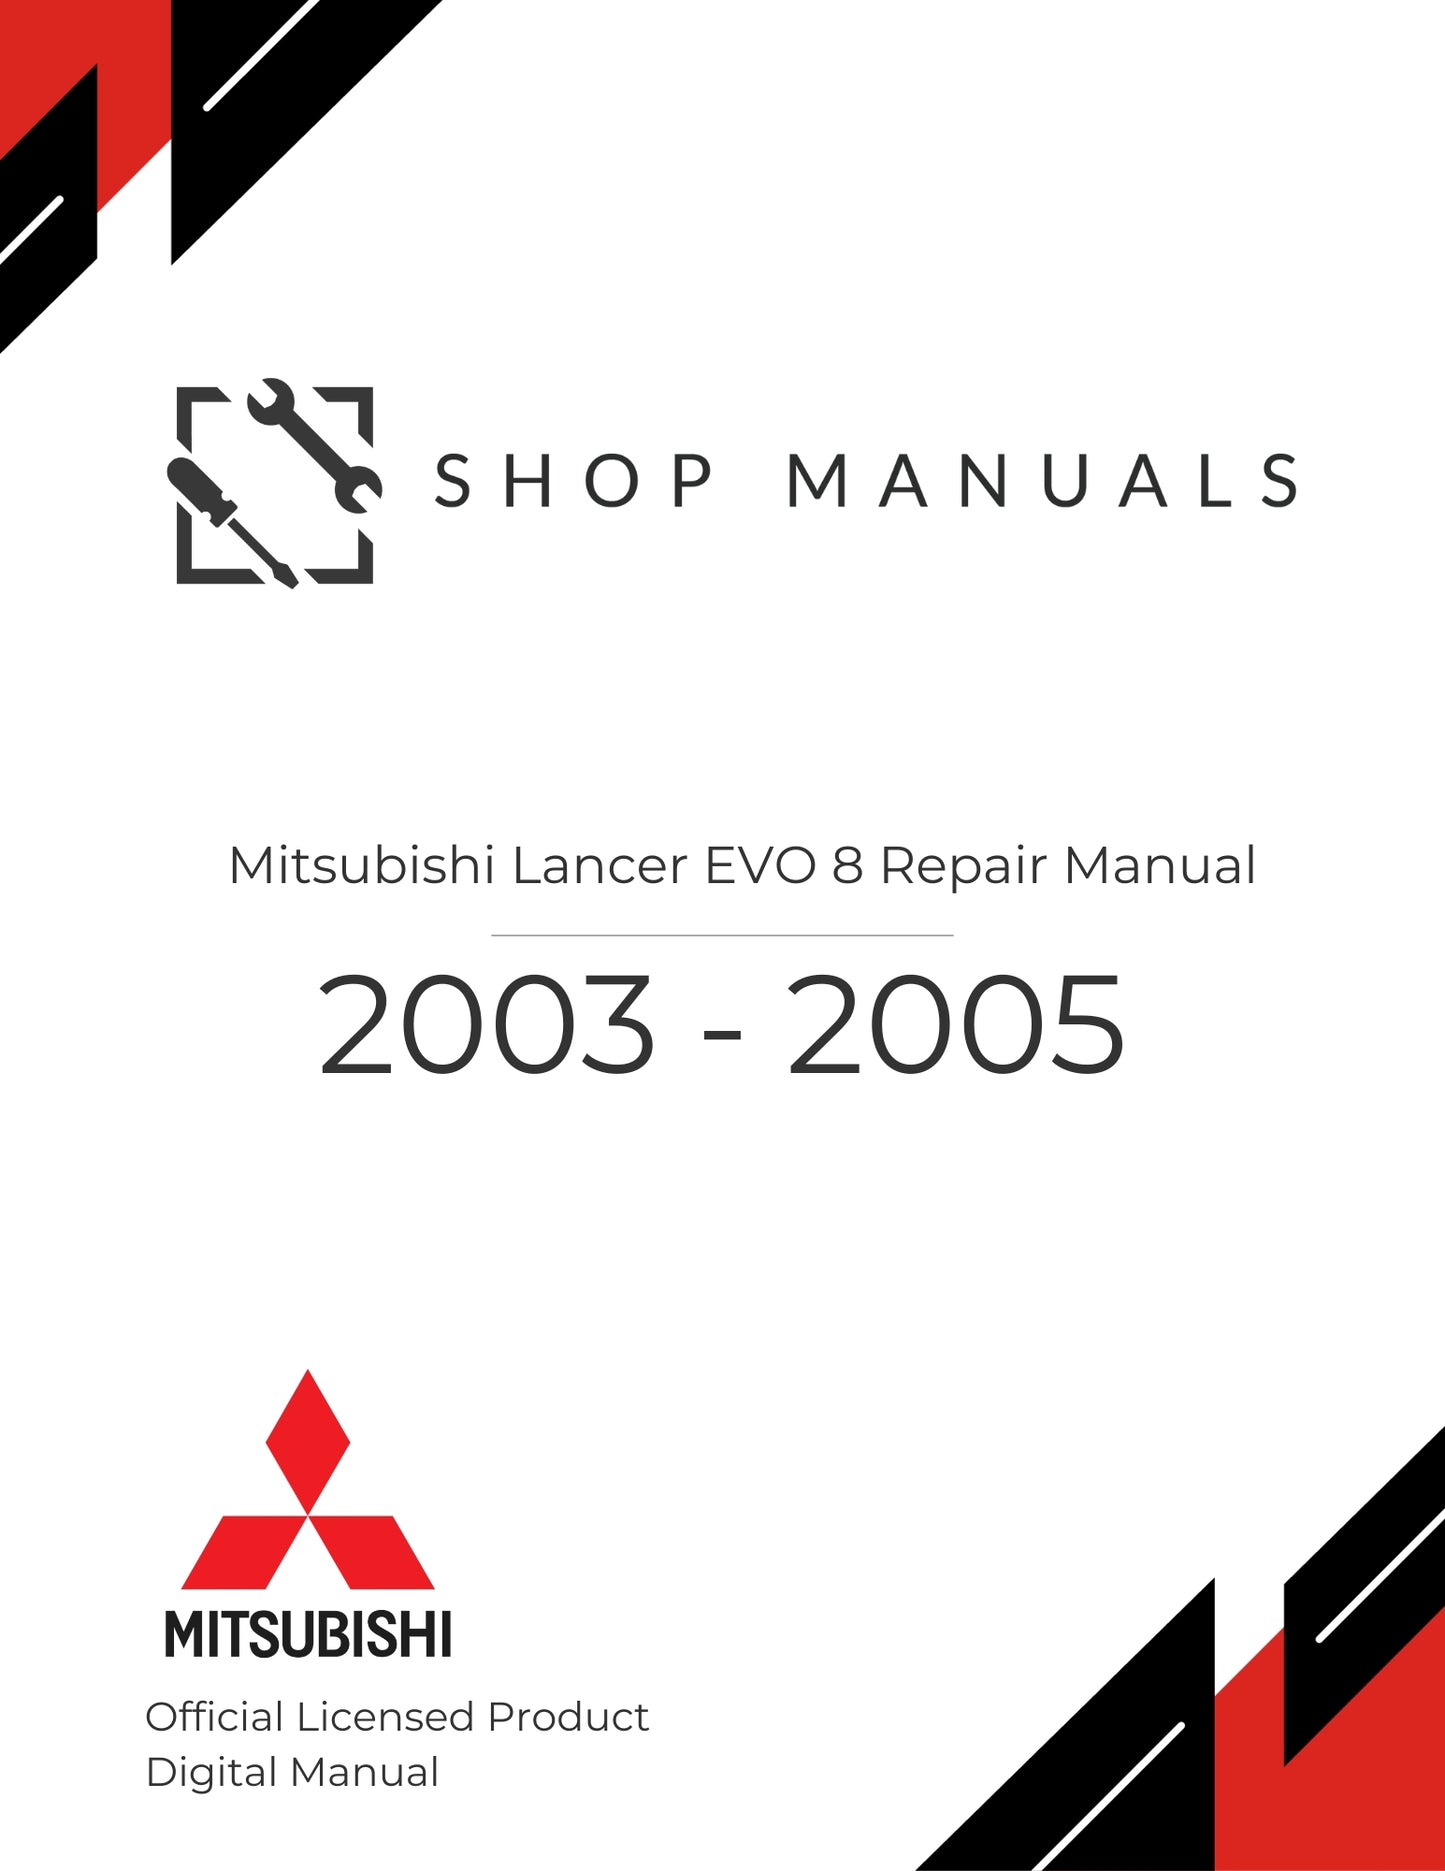 2003 - 2005 Mitsubishi Lancer EVO 8 Repair Manual